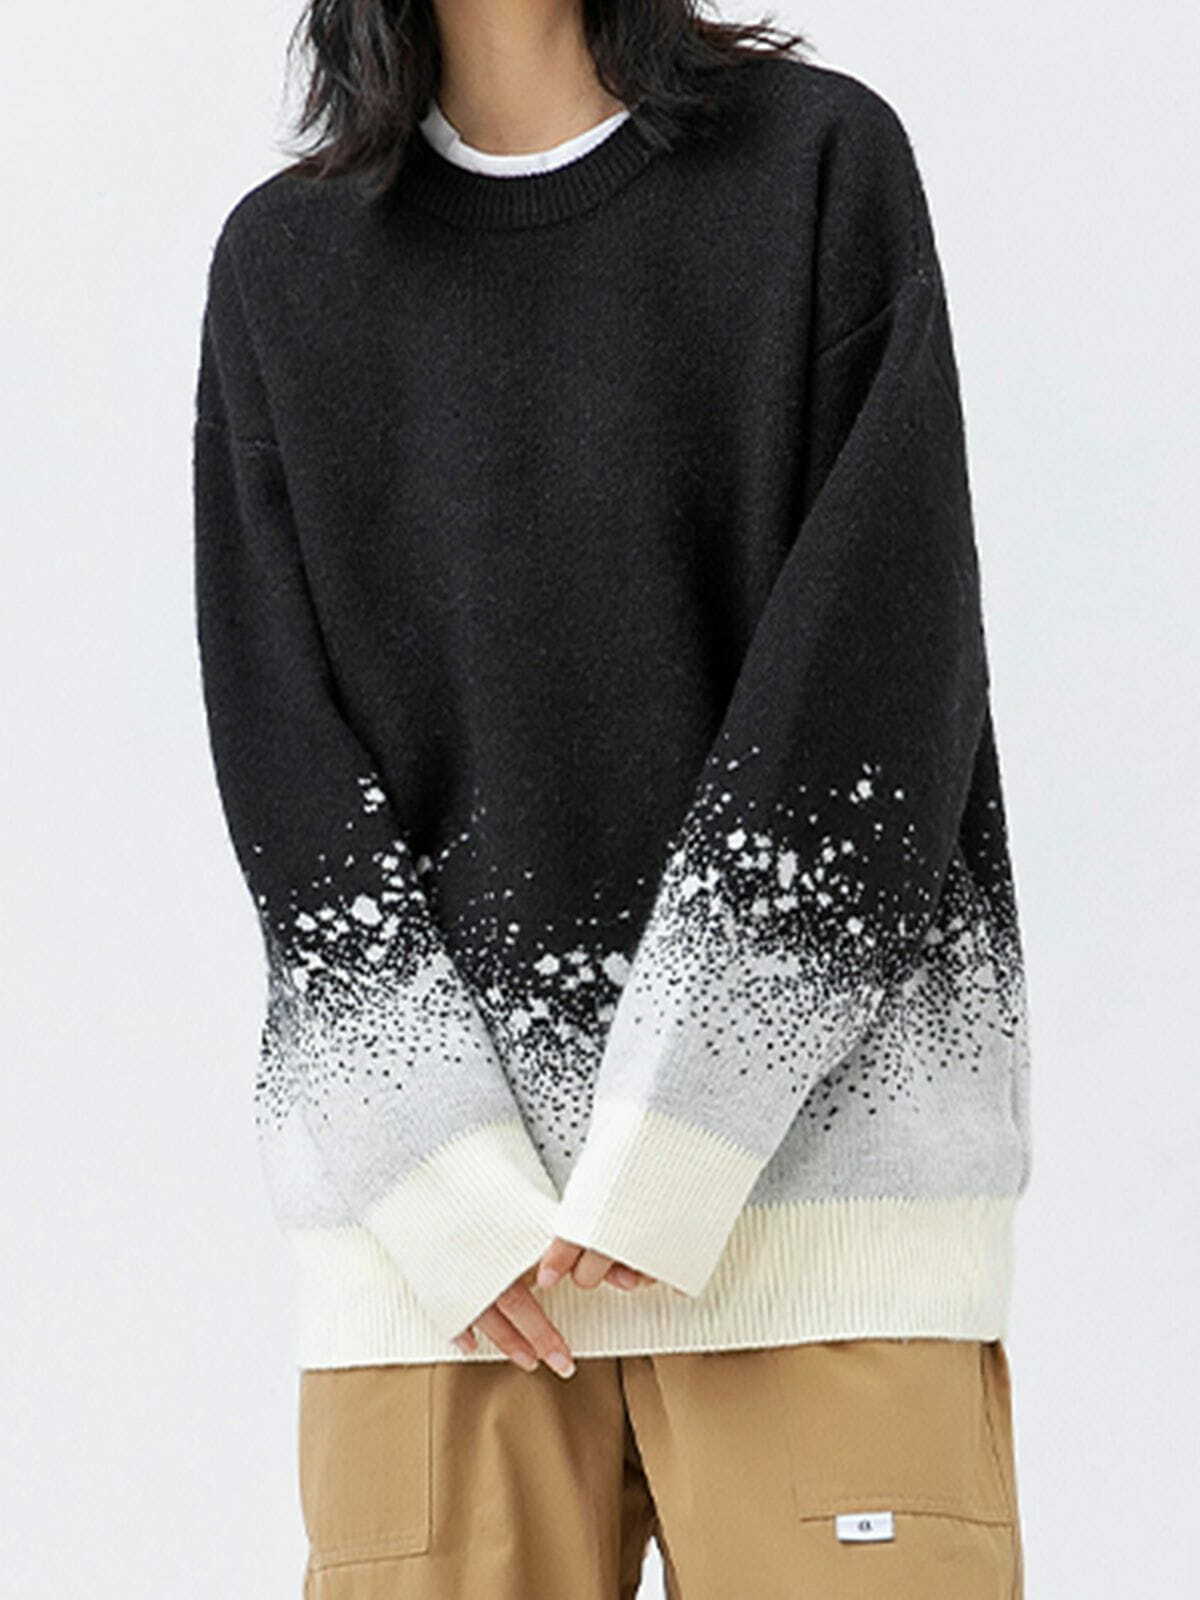 starry night gradient sweater edgy urban gradient knit 1003